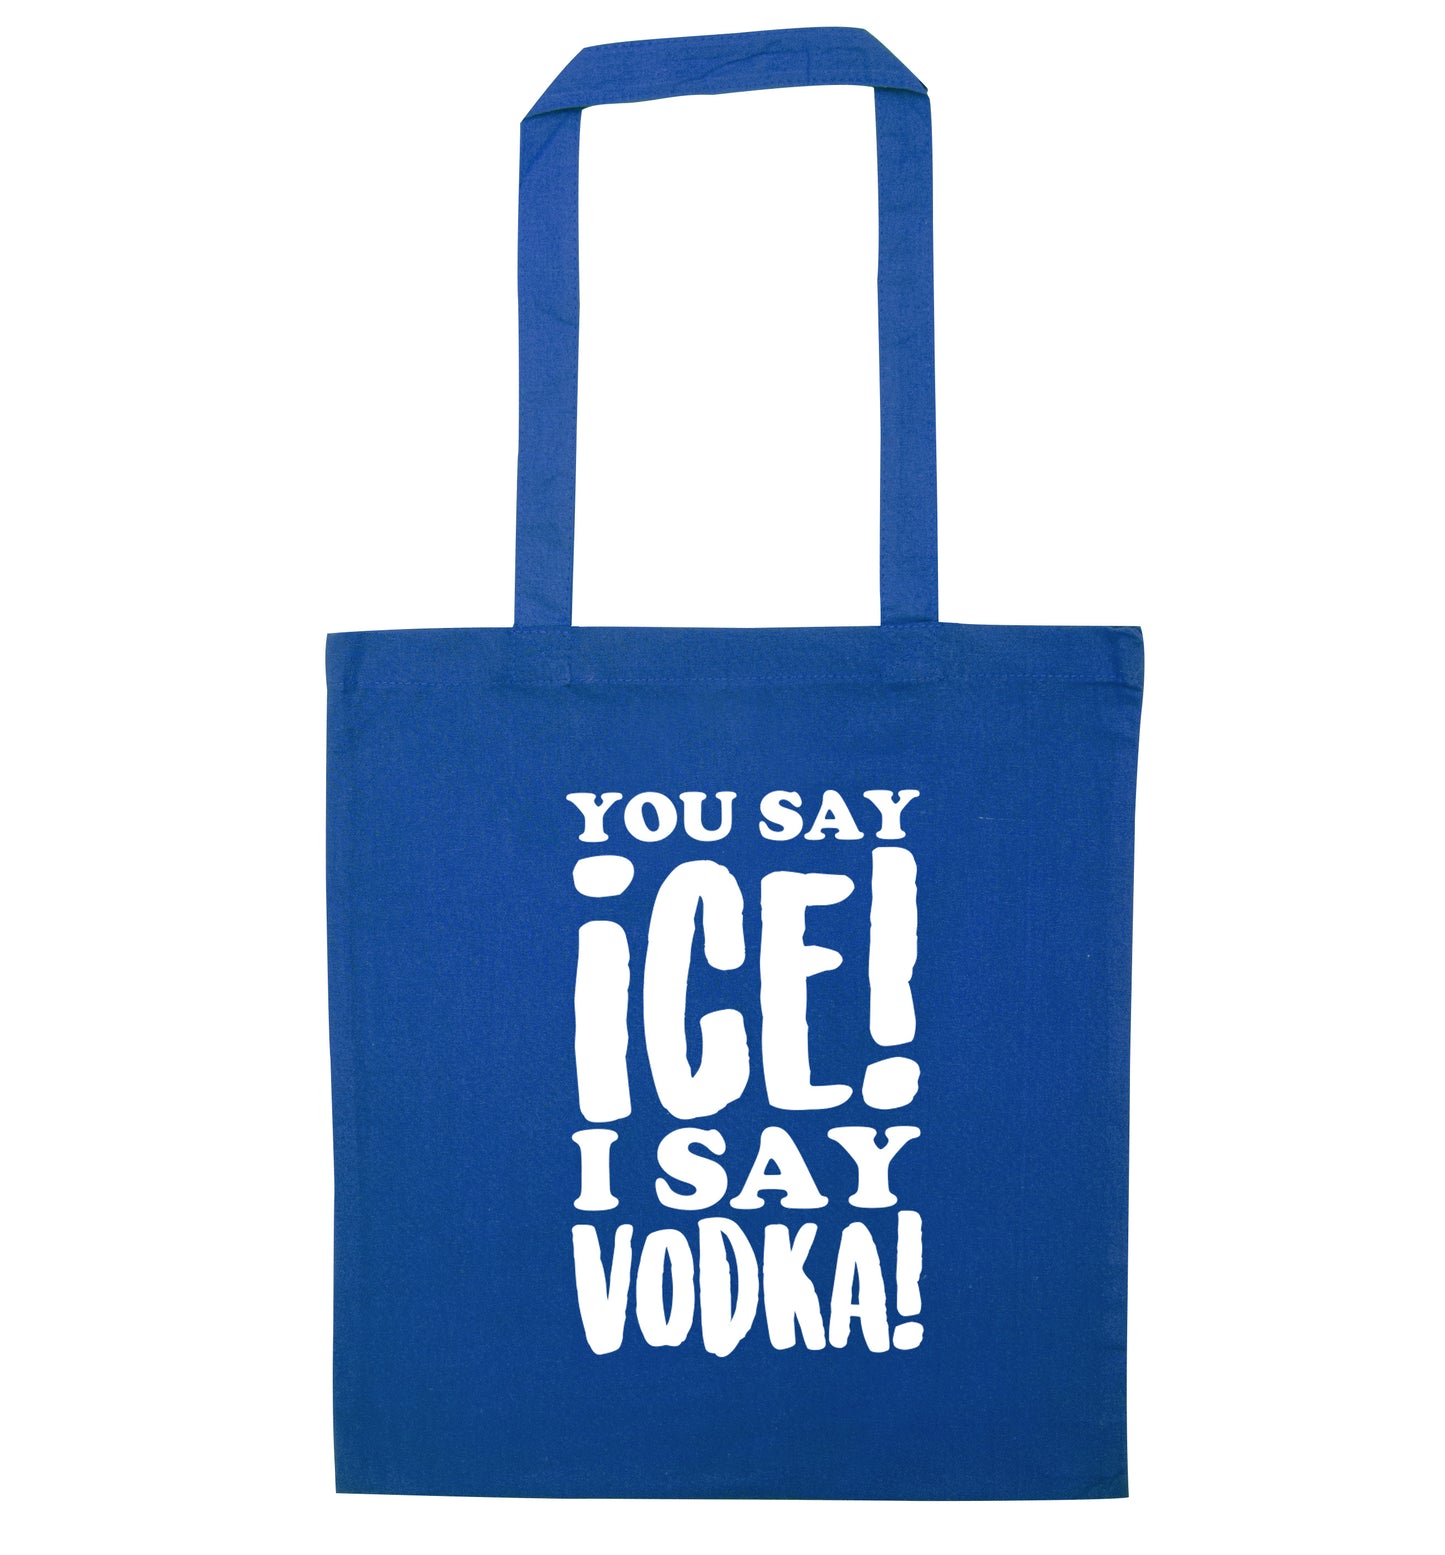 You say ice I say vodka! blue tote bag